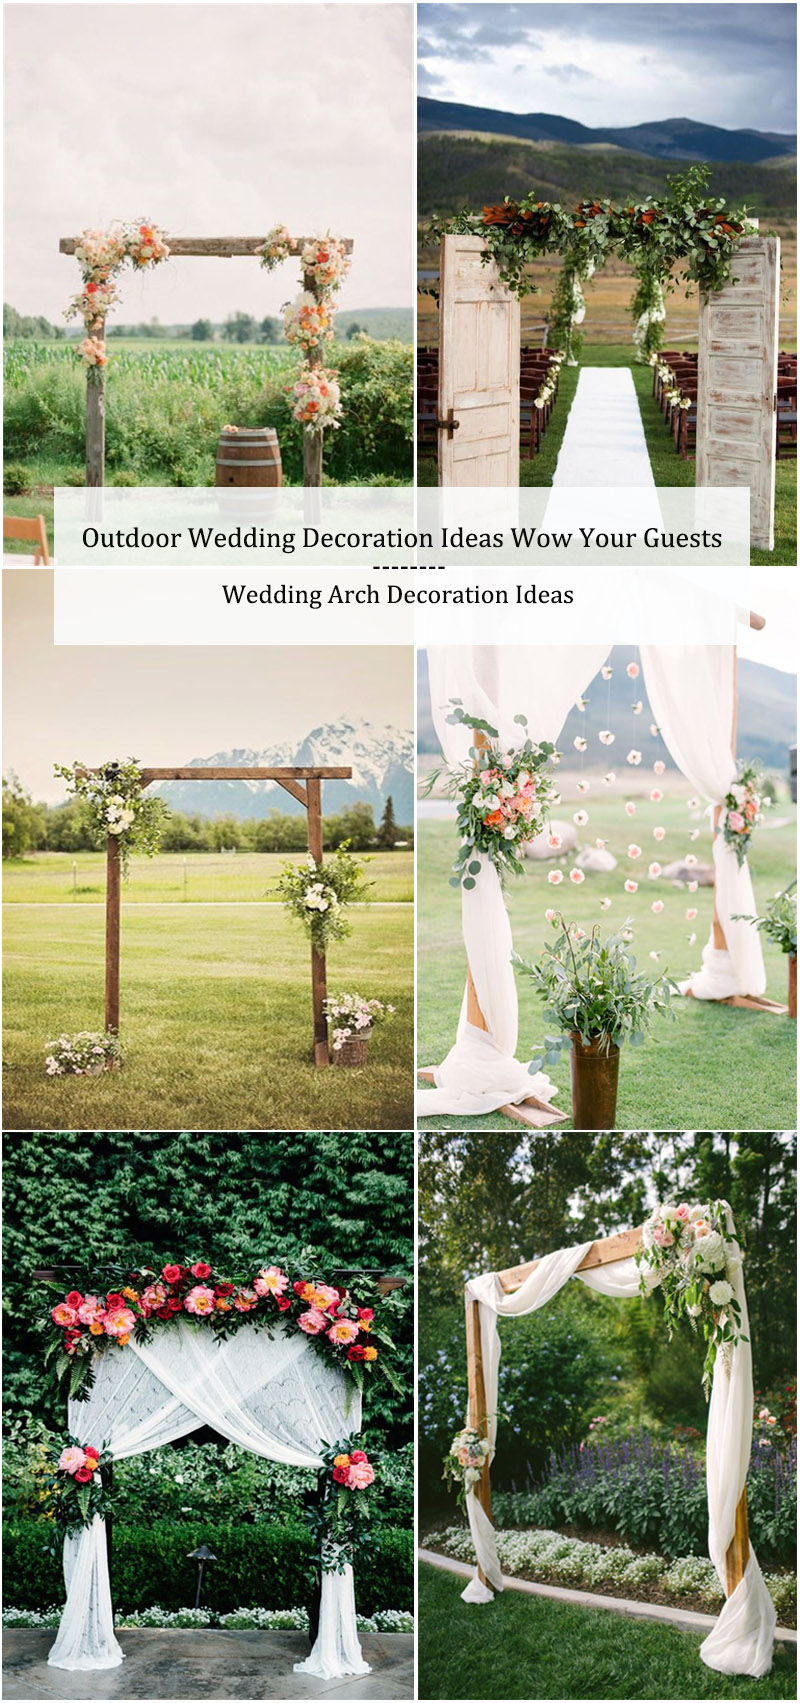 Arch Wedding Decorations Outdoor Wedding Decoration Ideas Wedding Arch Decoration Ideas arch wedding decorations|guidedecor.com